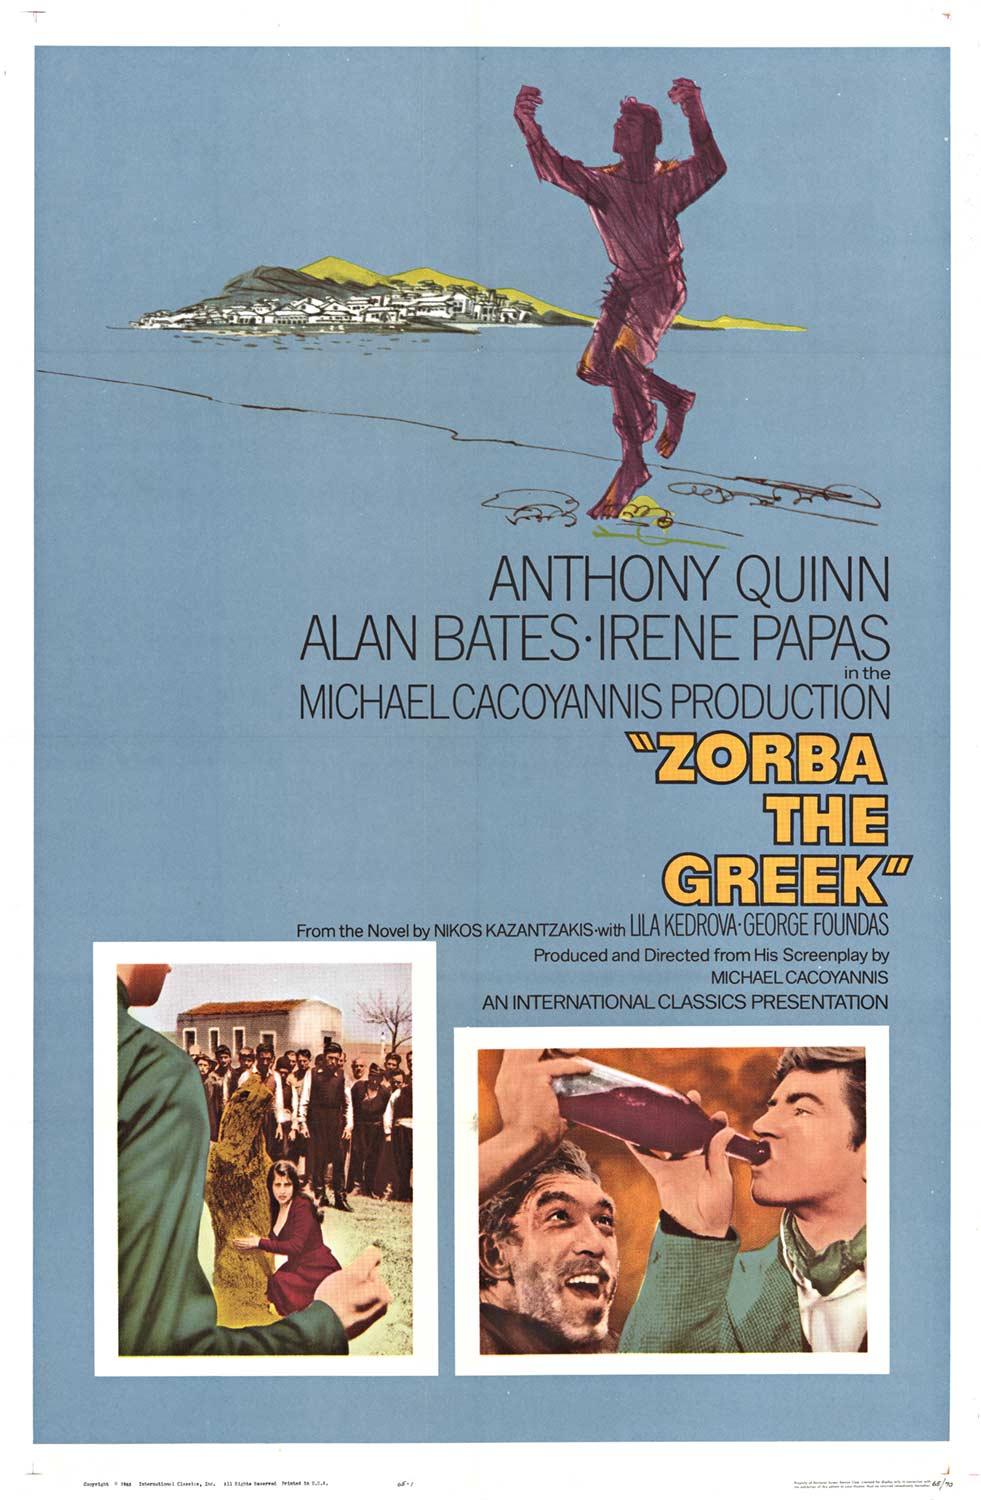 Unknown Portrait Print - Original "Zorba The Greek" US 1-sheet vintage movie poster  1965